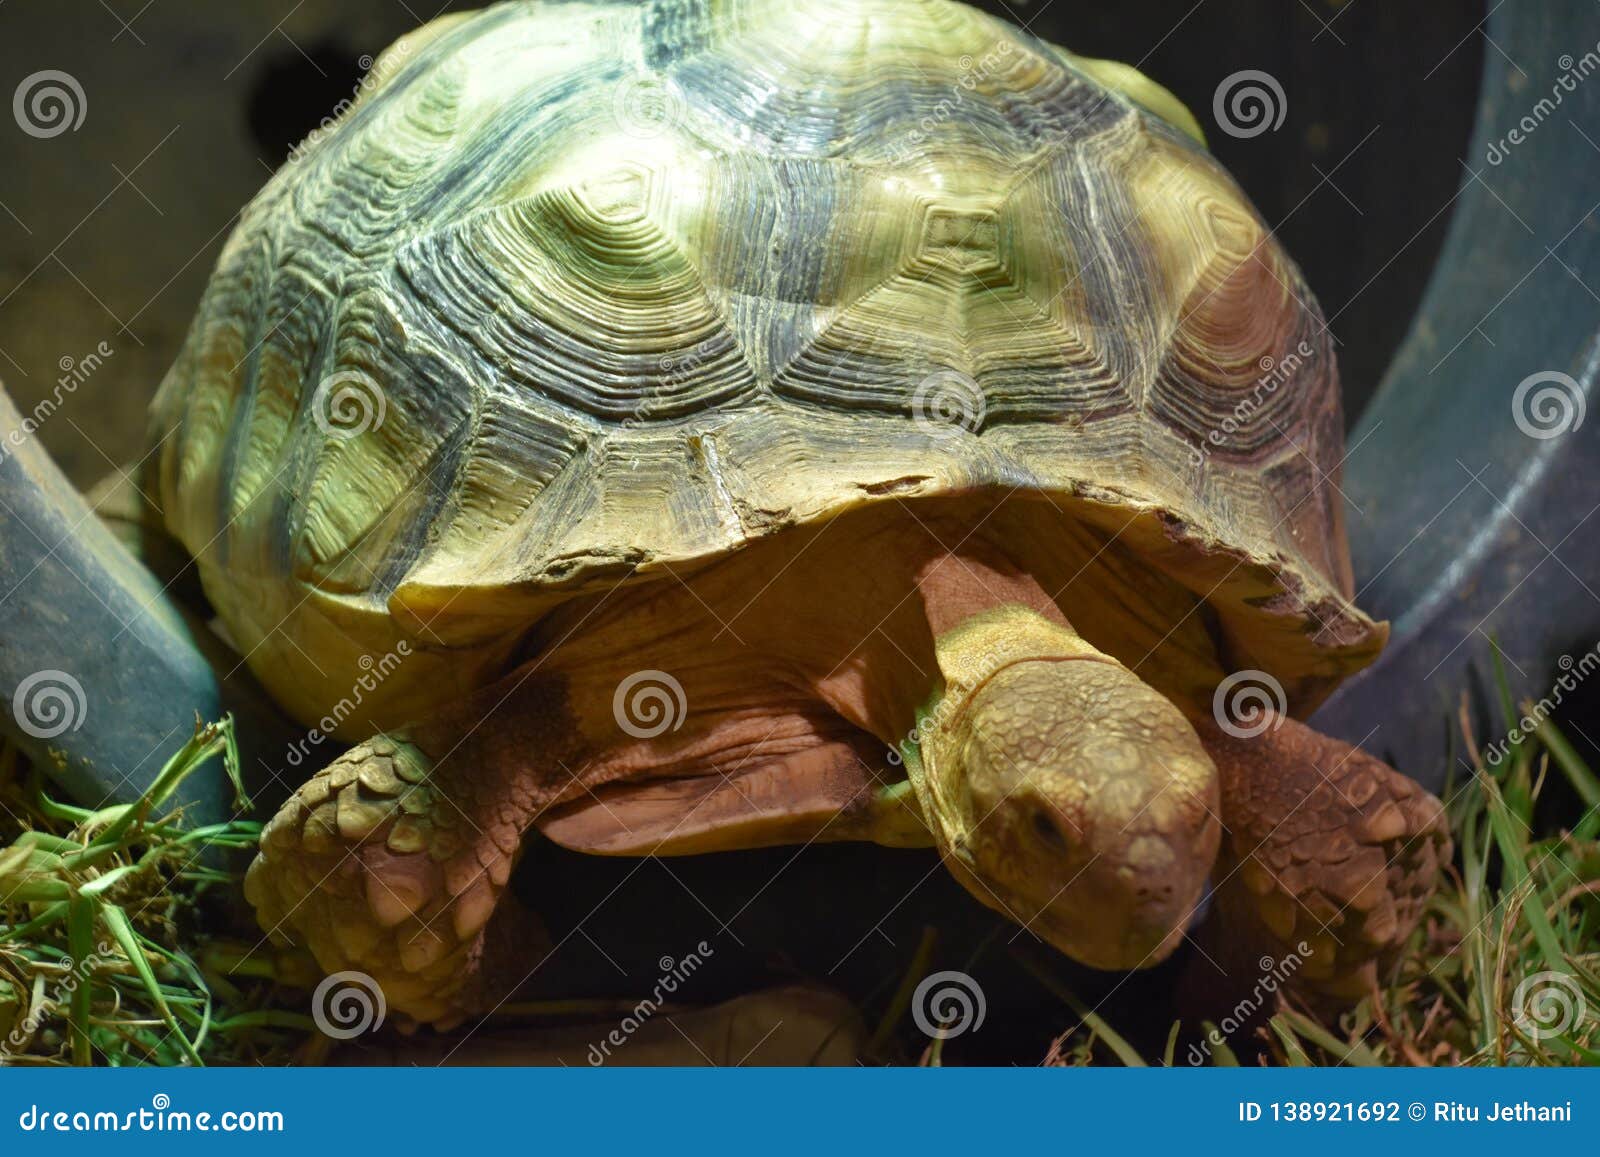 A Green Tortoise stock photo. Image of huge, shell, closeup - 138921692